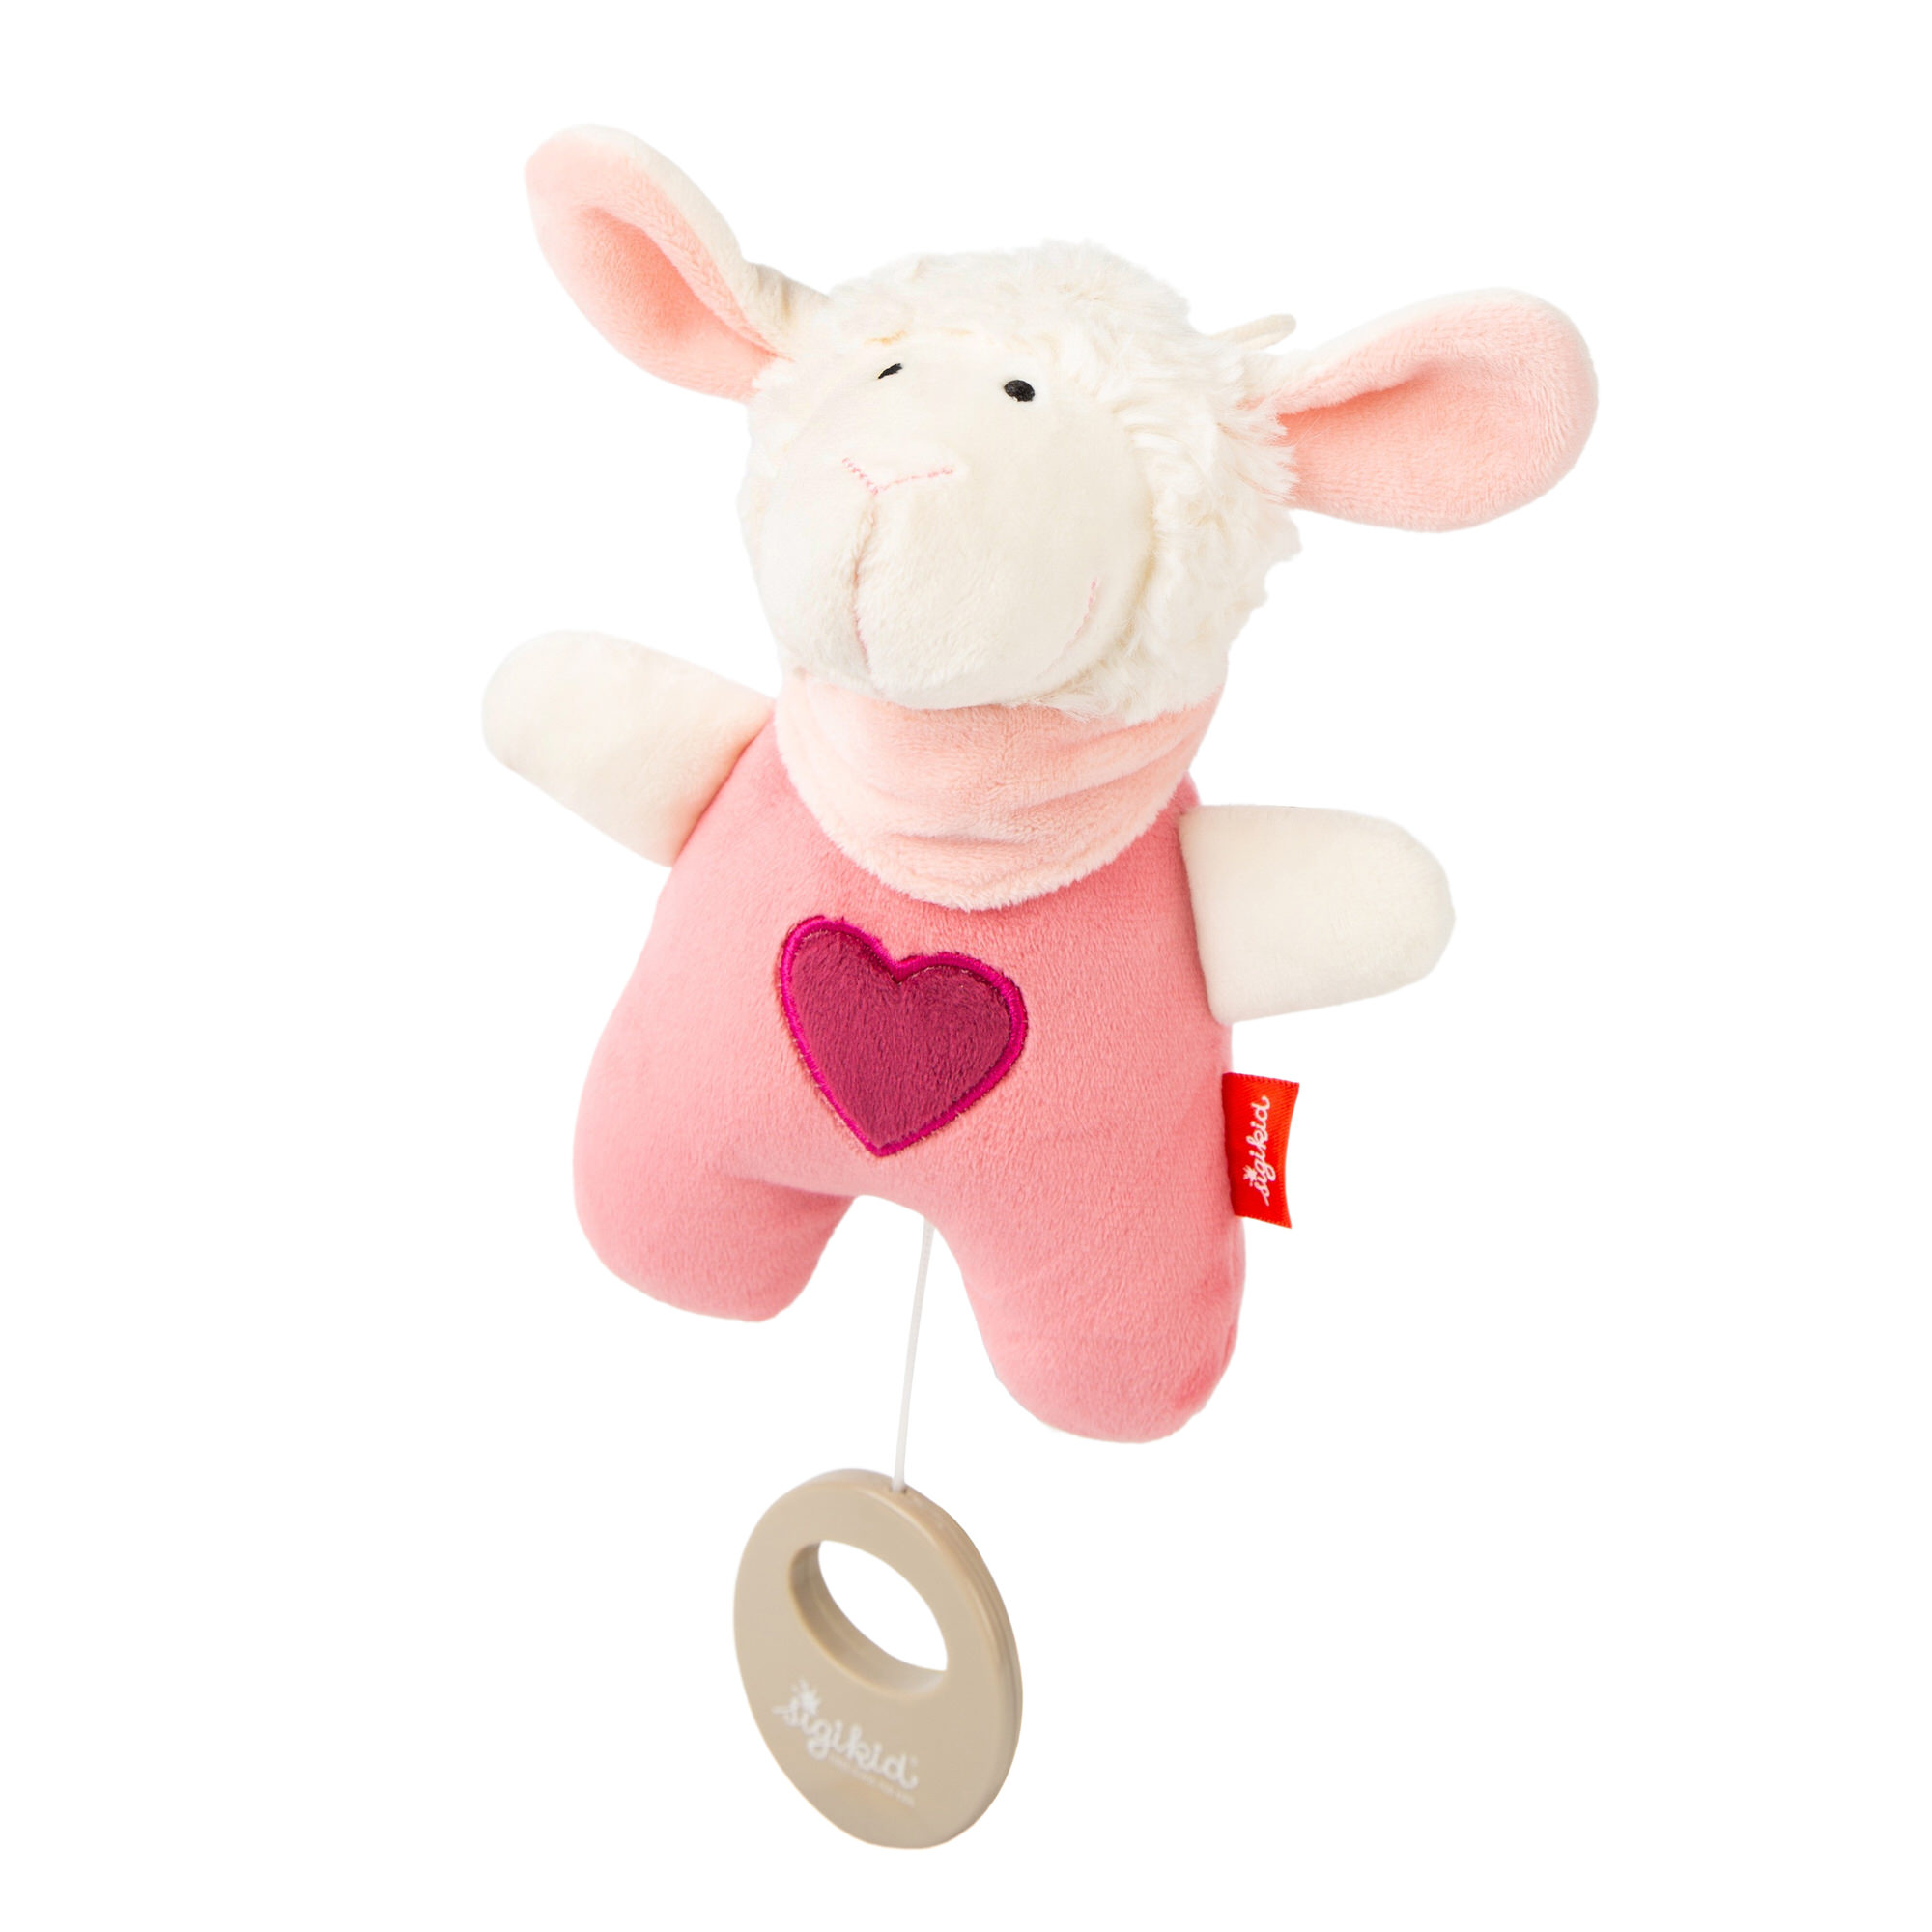 Musical mini baby plush toy sheep